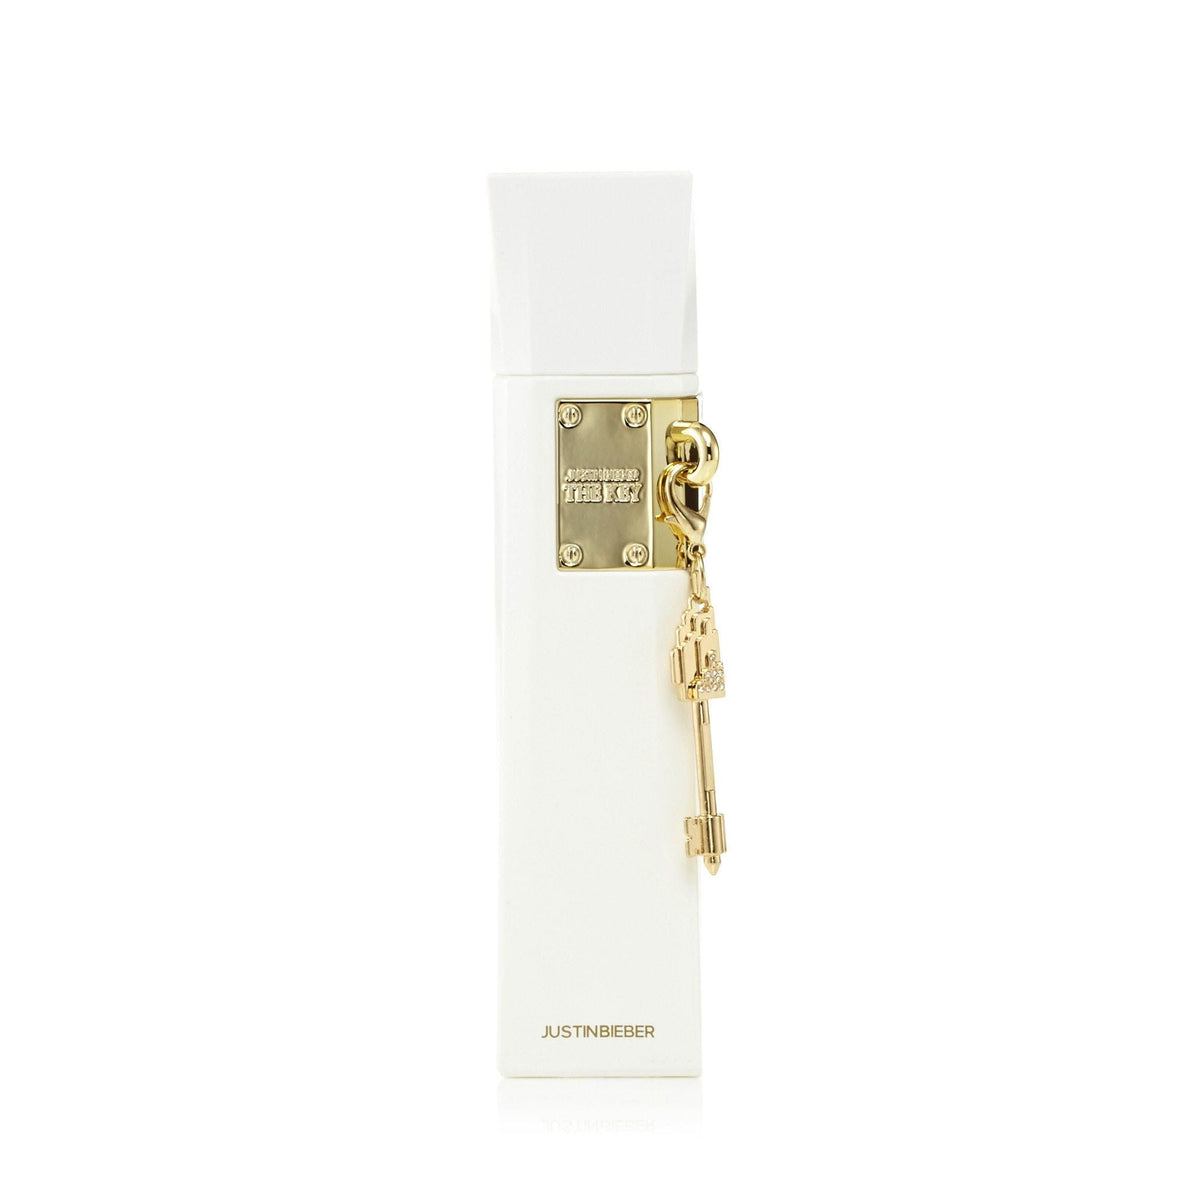 Justin Bibier The Key Eau de Parfum Womens Spray 3.4 oz. 